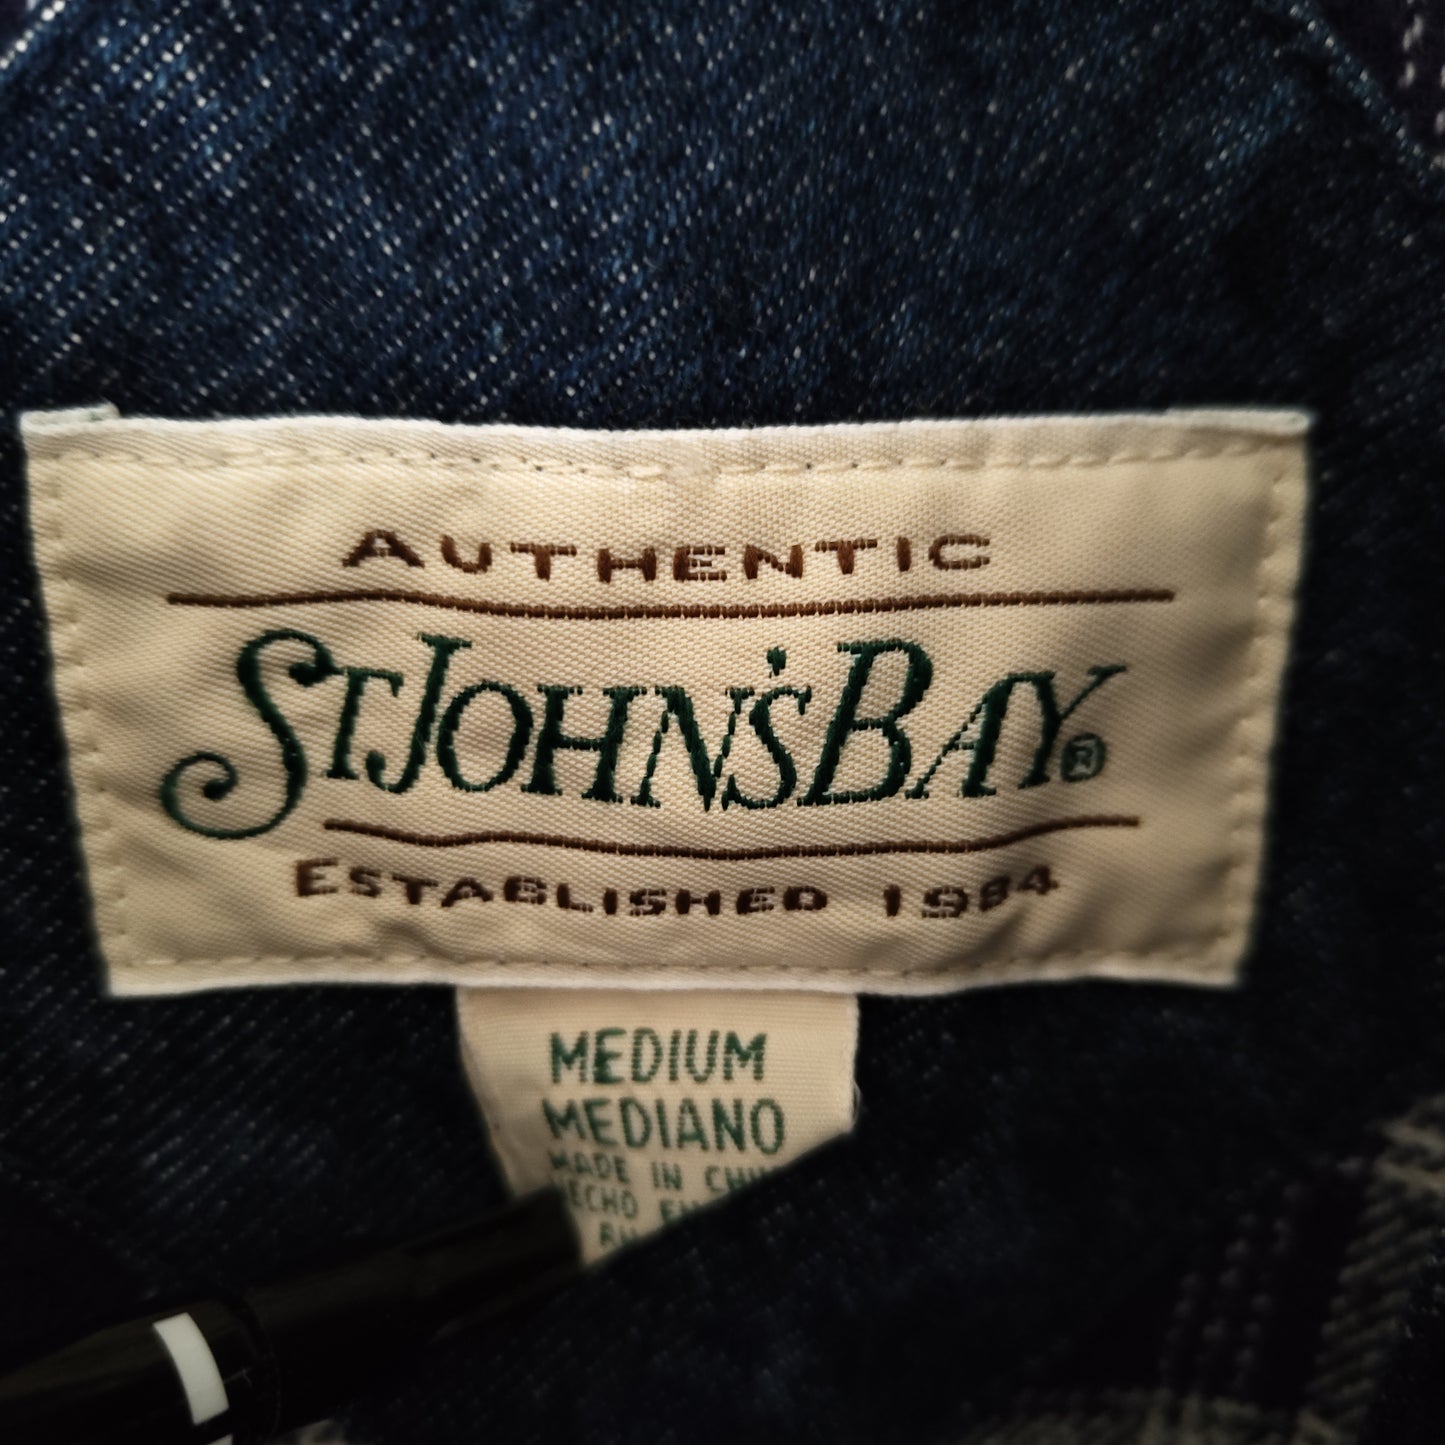 [ST JOHN'S BAY] denim jacket